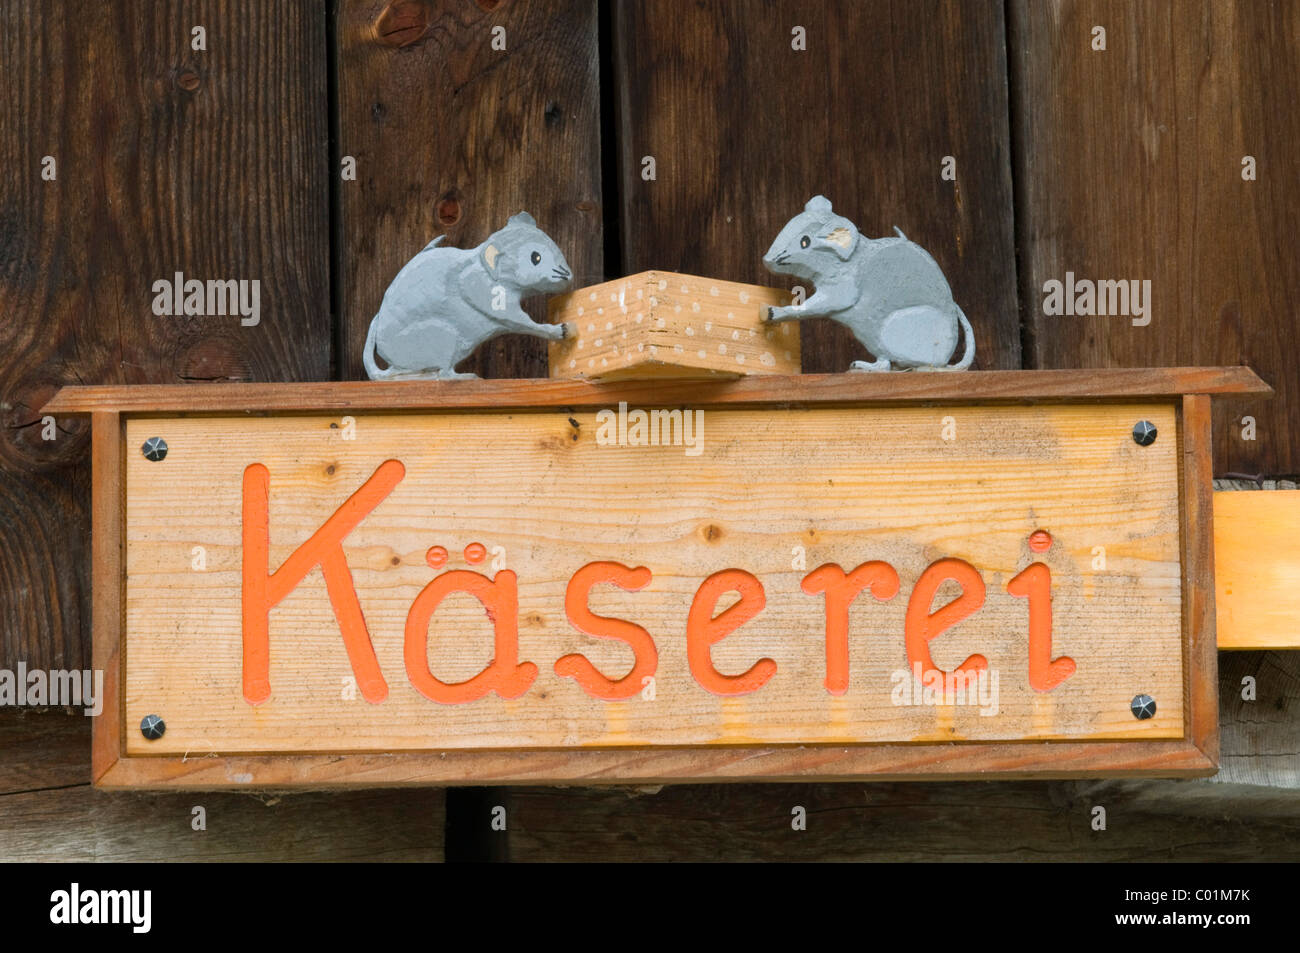 Kaeserei, sign of a cheese dairy, Luesens, Luesenertal, Tyrol, Austria, Europe Stock Photo